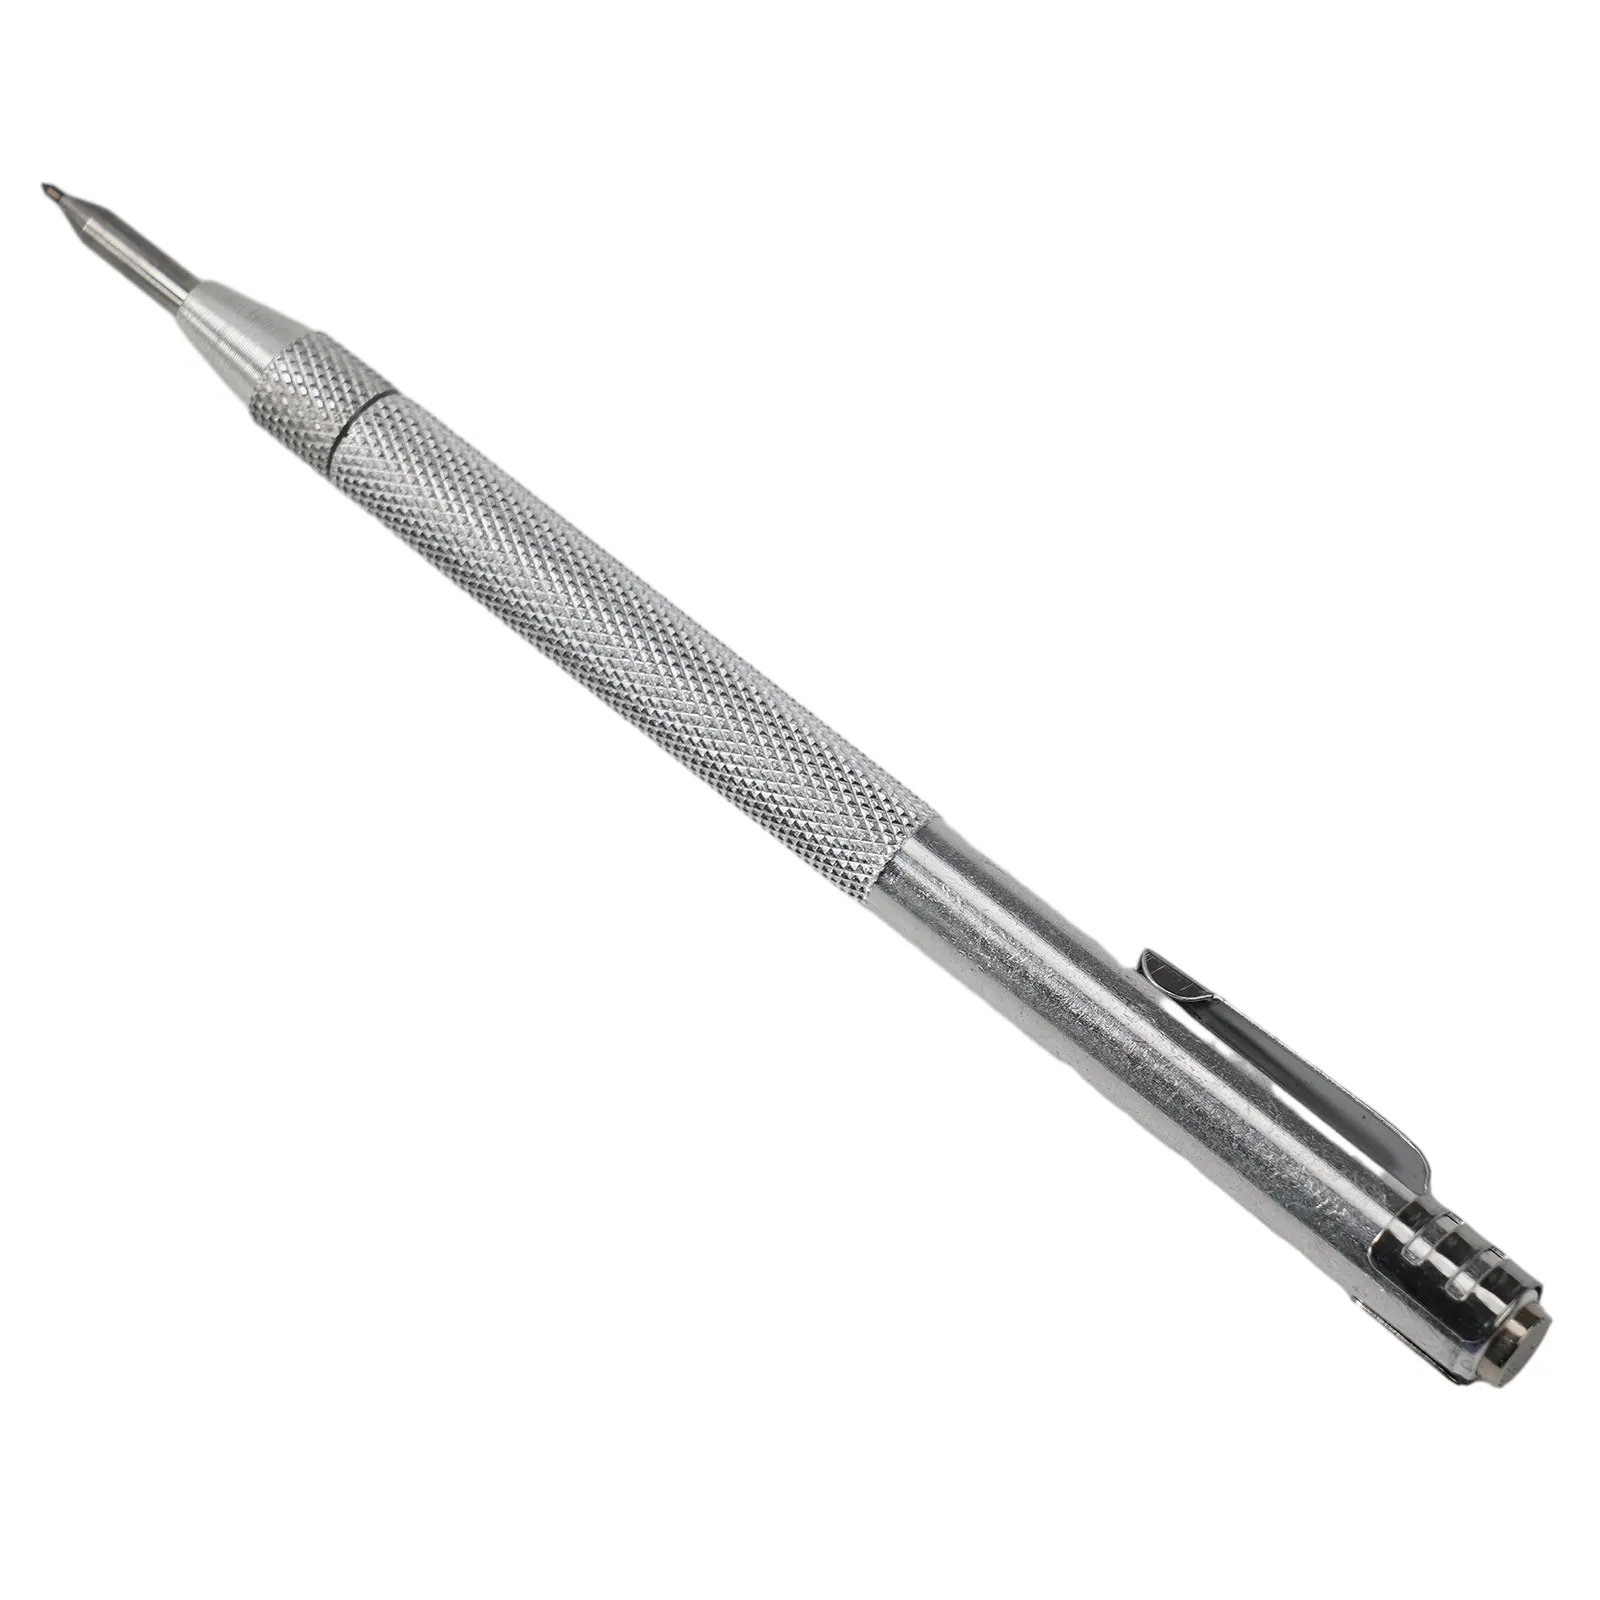 

Scriber Pen Tungsten Carbide Engraving Pen Marking Carving-Scribing Marker For Glass-Ceramic Metal Wood Construction Tool Kits